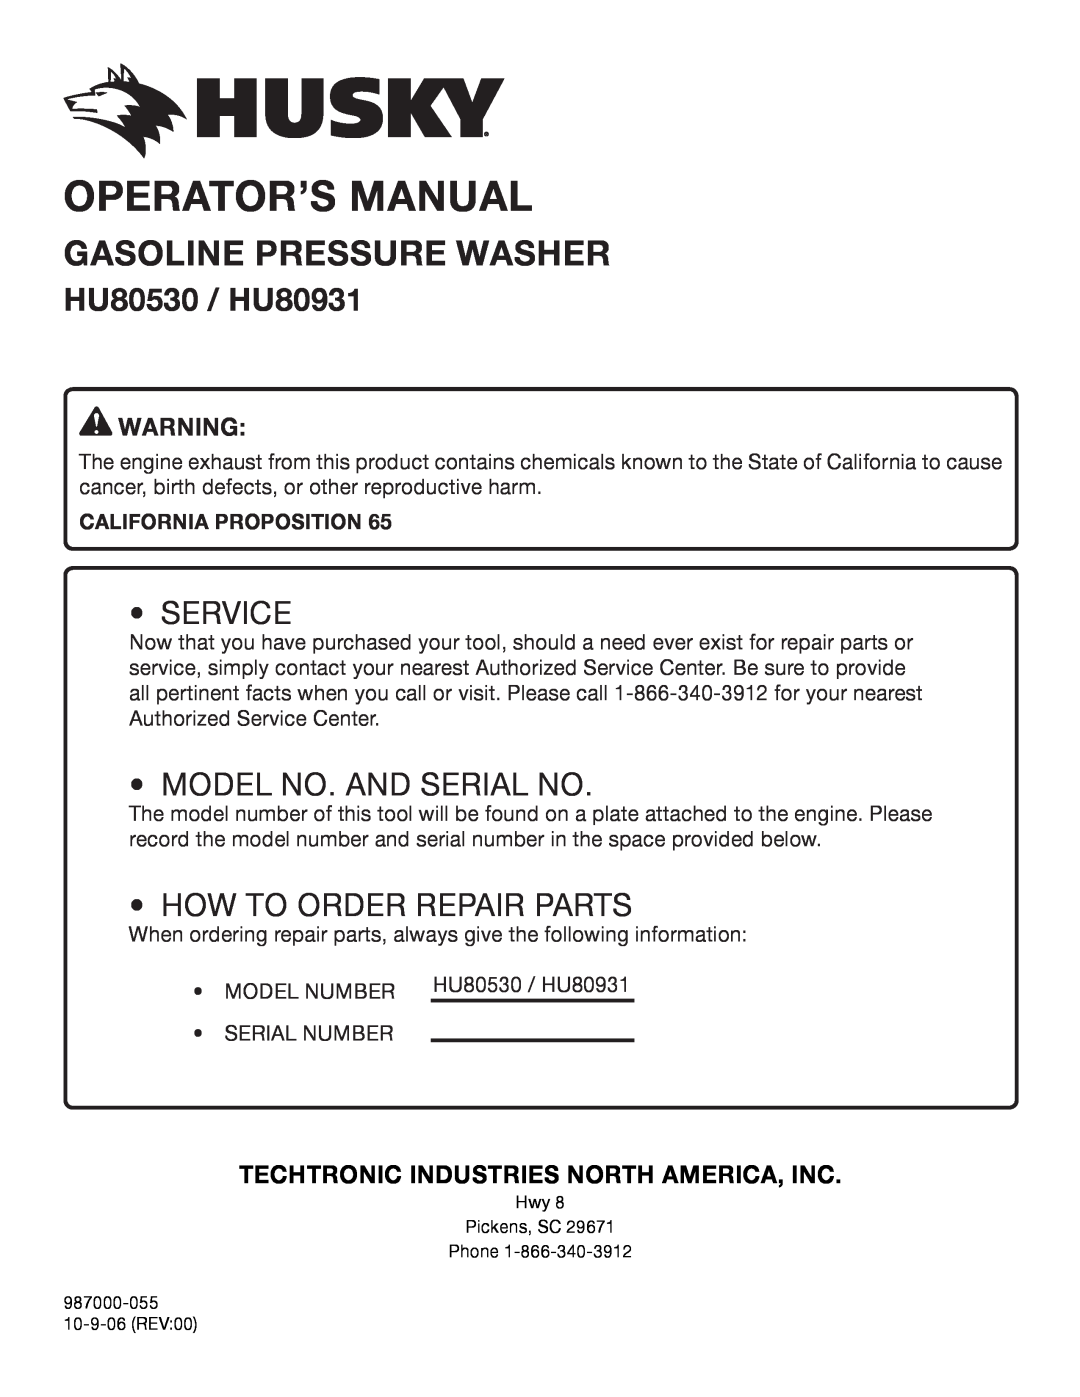 Briggs & Stratton manual California Proposition, Operator’S Manual, Gasoline Pressure Washer, HU80530 / HU80931, Service 